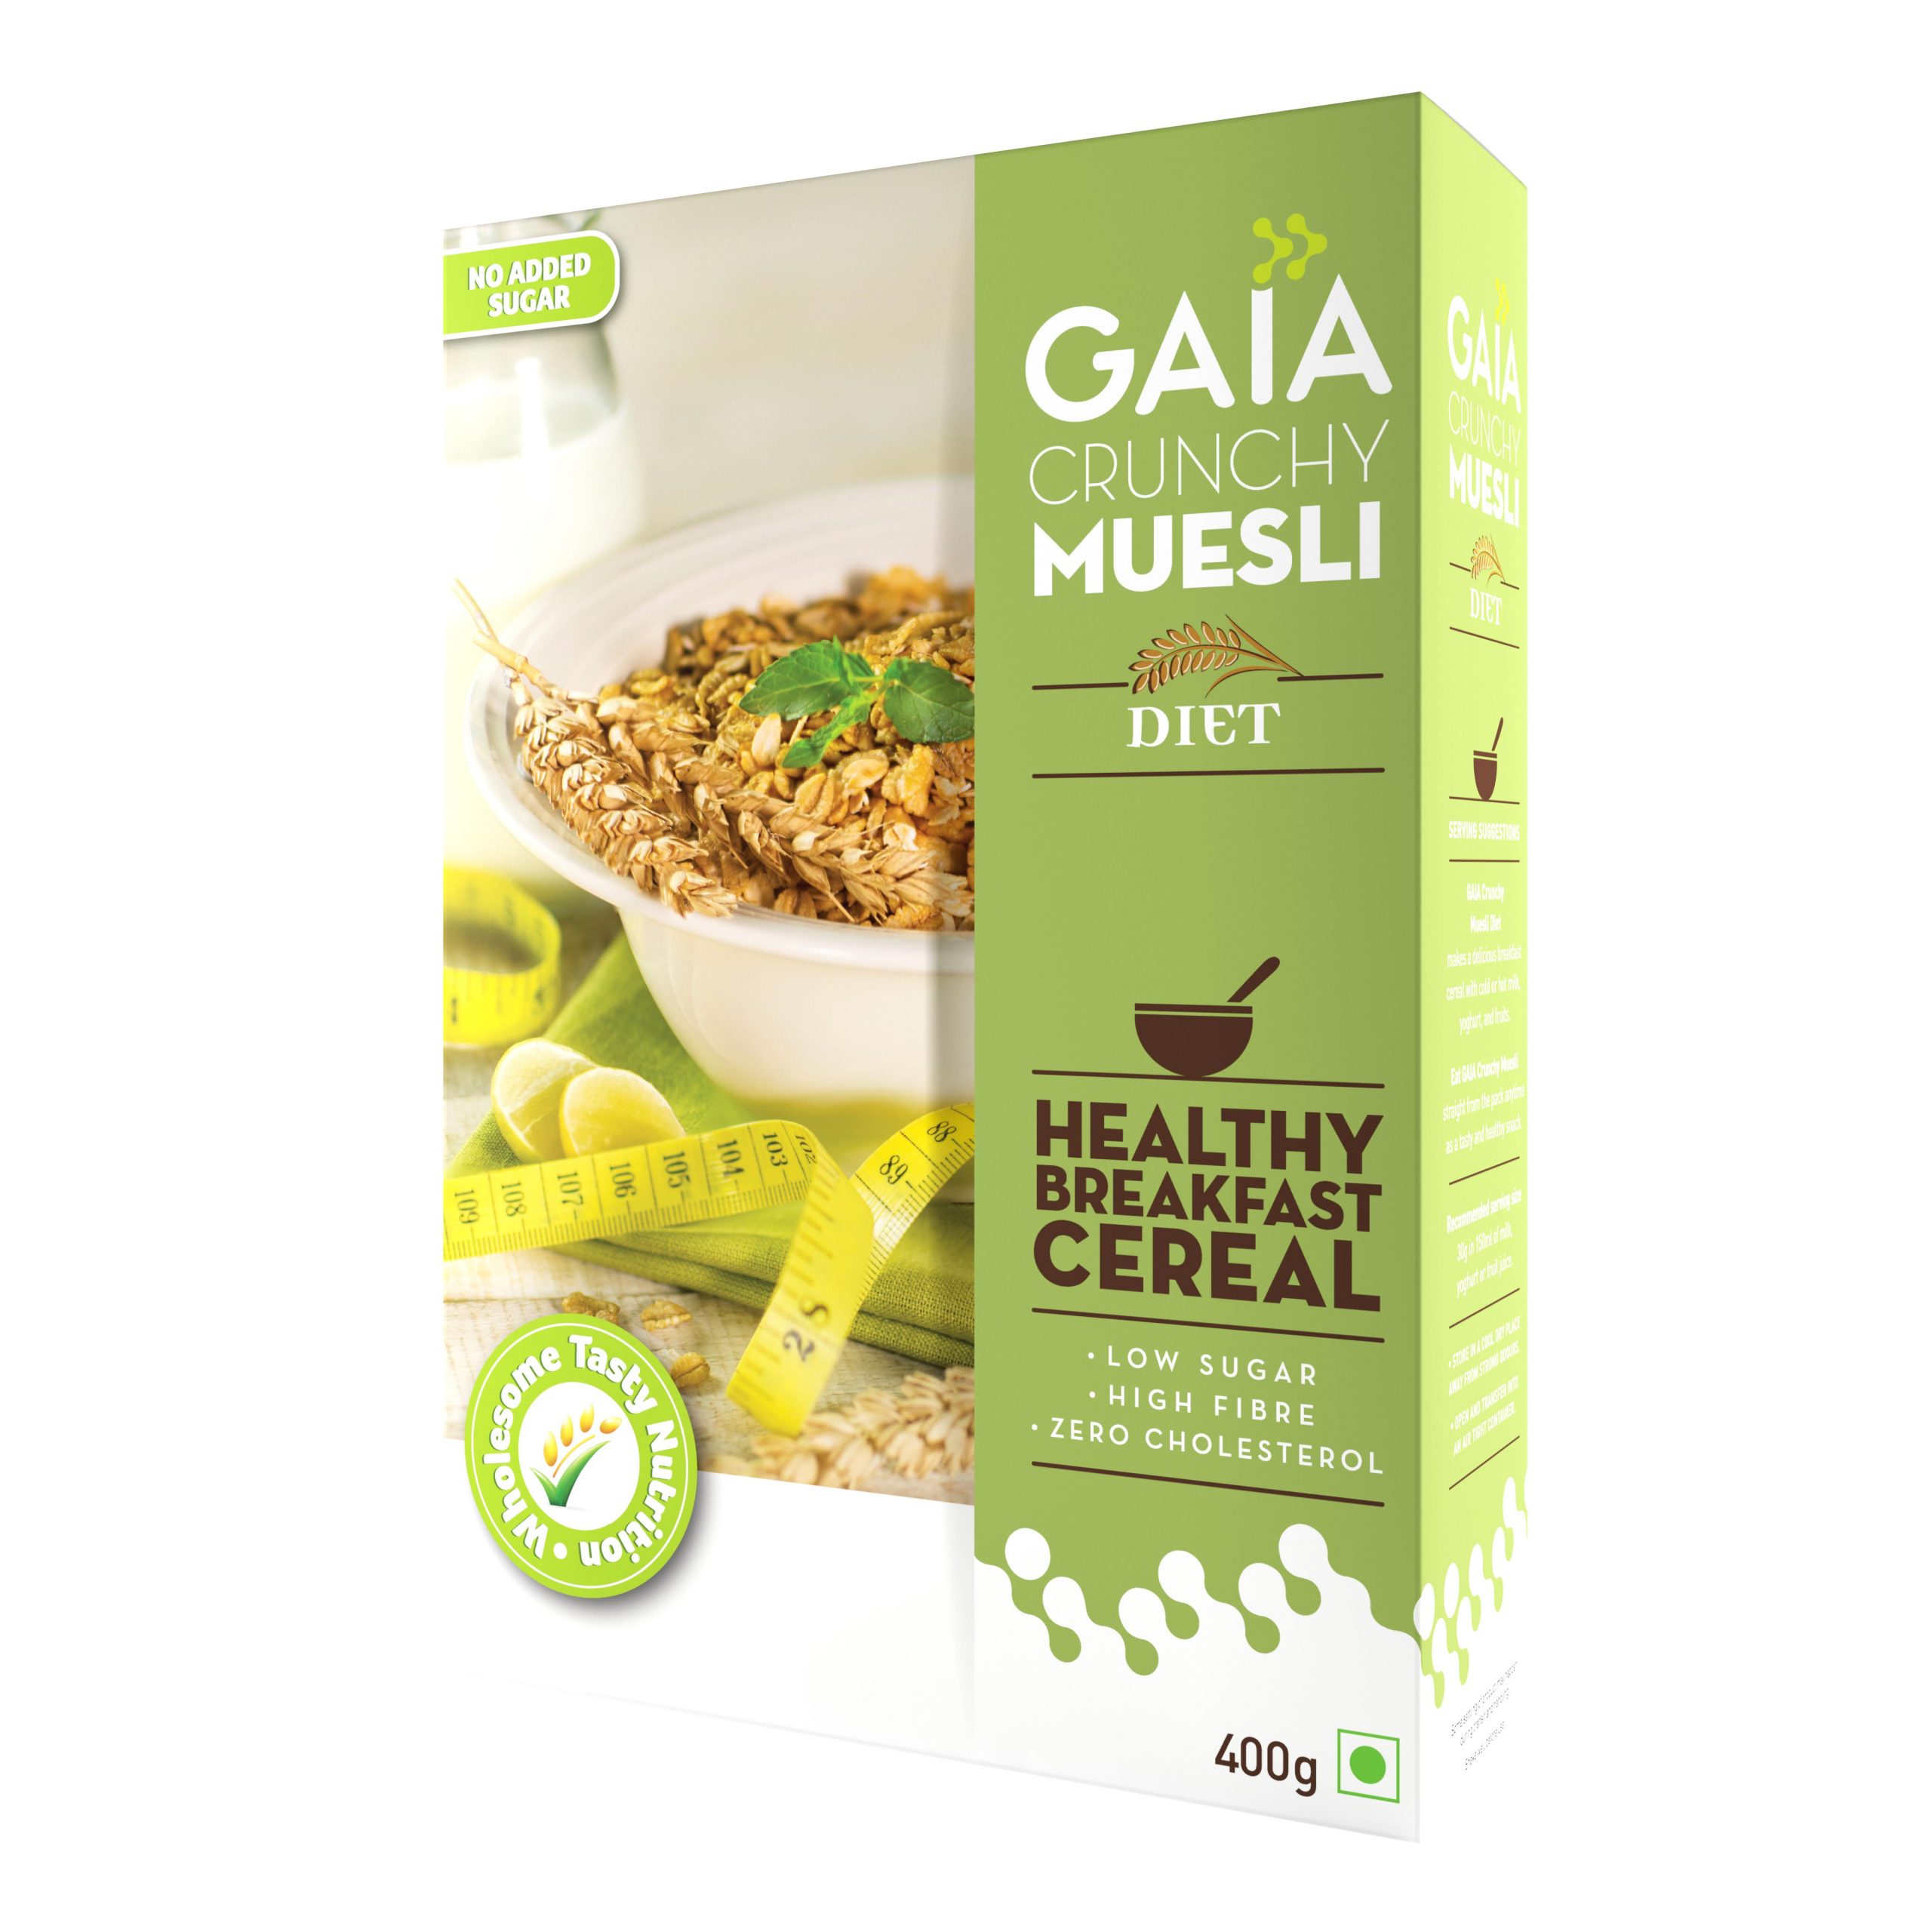 Gaia Crunchy Muesli â€šÃ„Ã¶âˆšÃ‘âˆšÂ¨ Diet Image